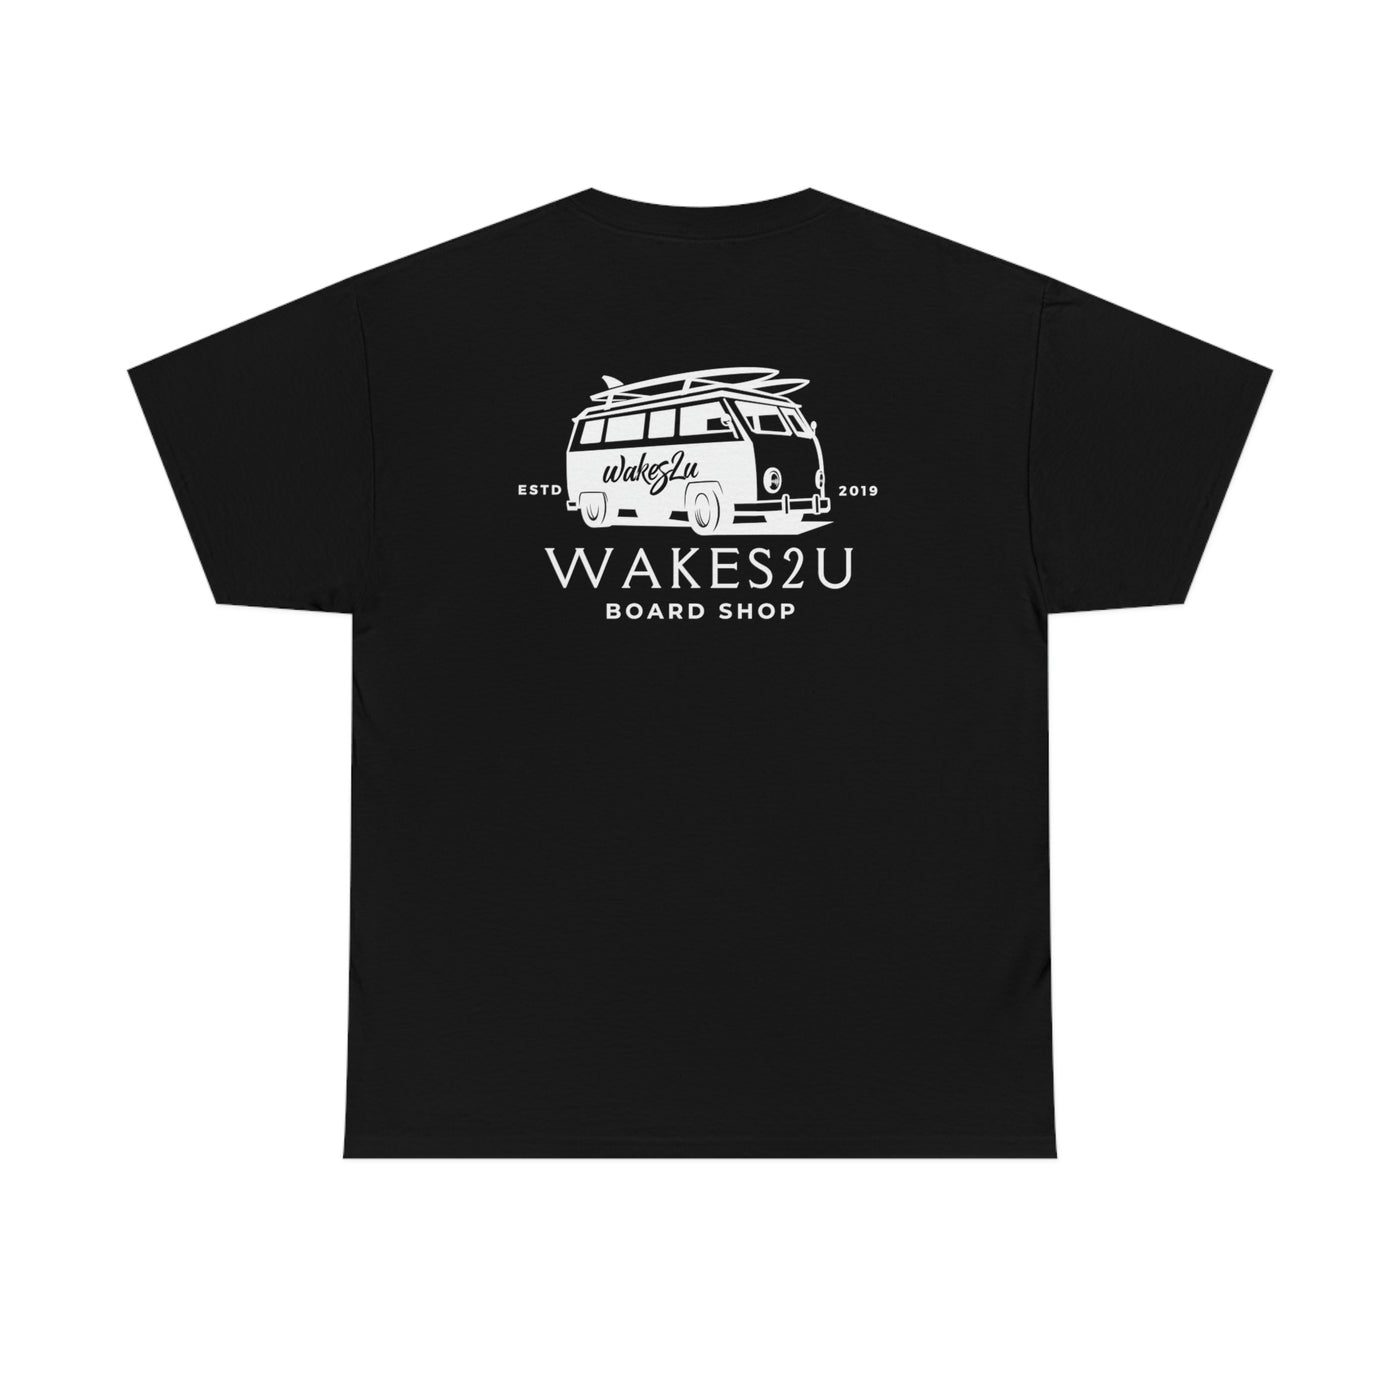 Wakes2u "hippie van" T-shirt